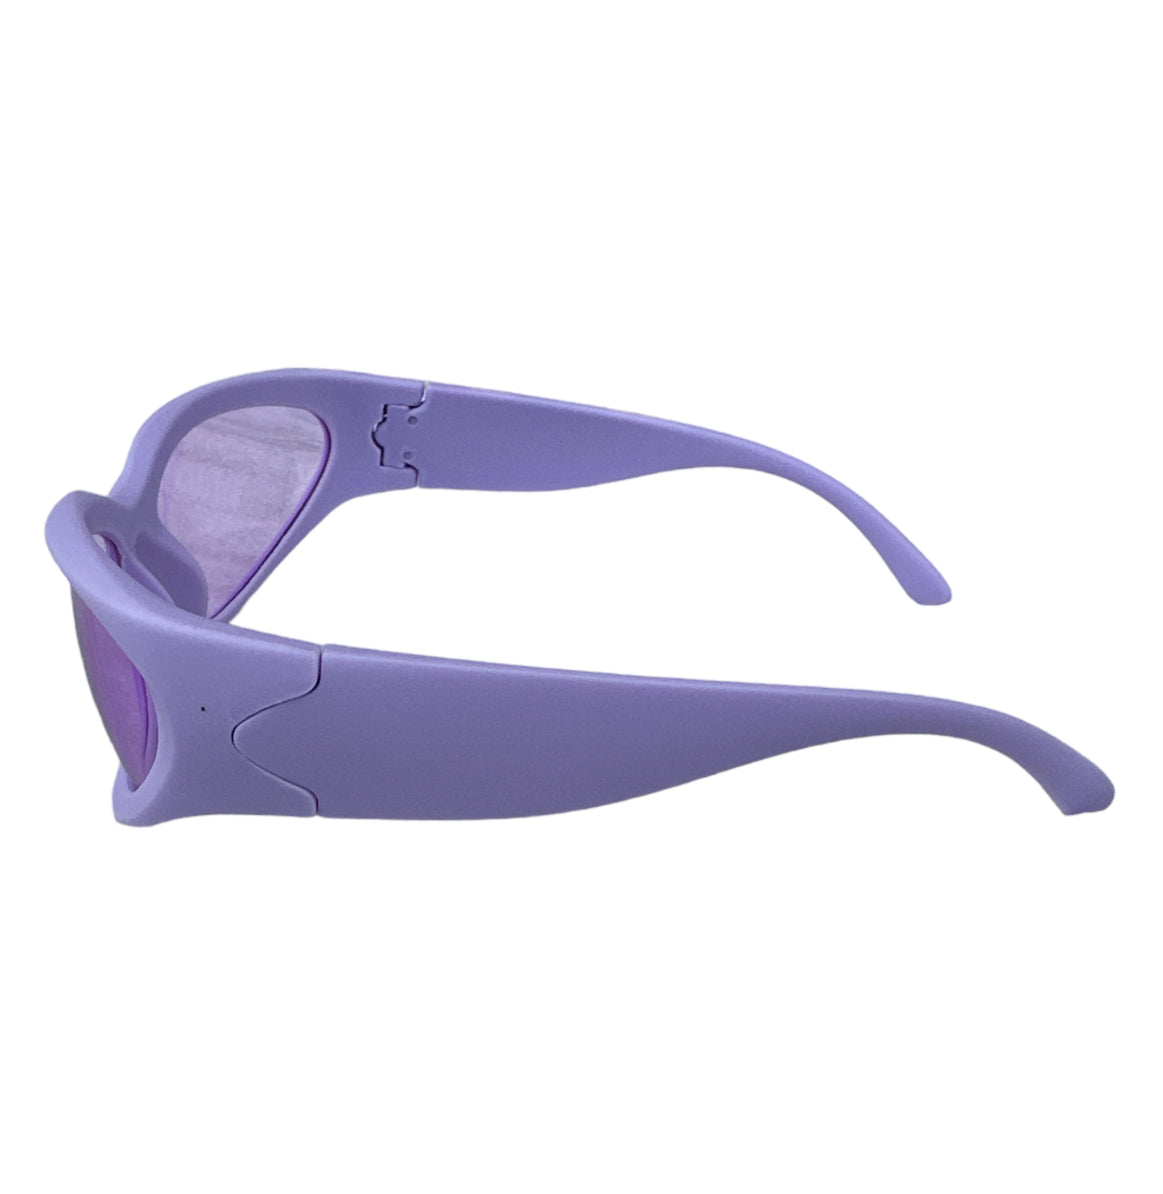 Retro 90’s Sport Sunglasses in Violet